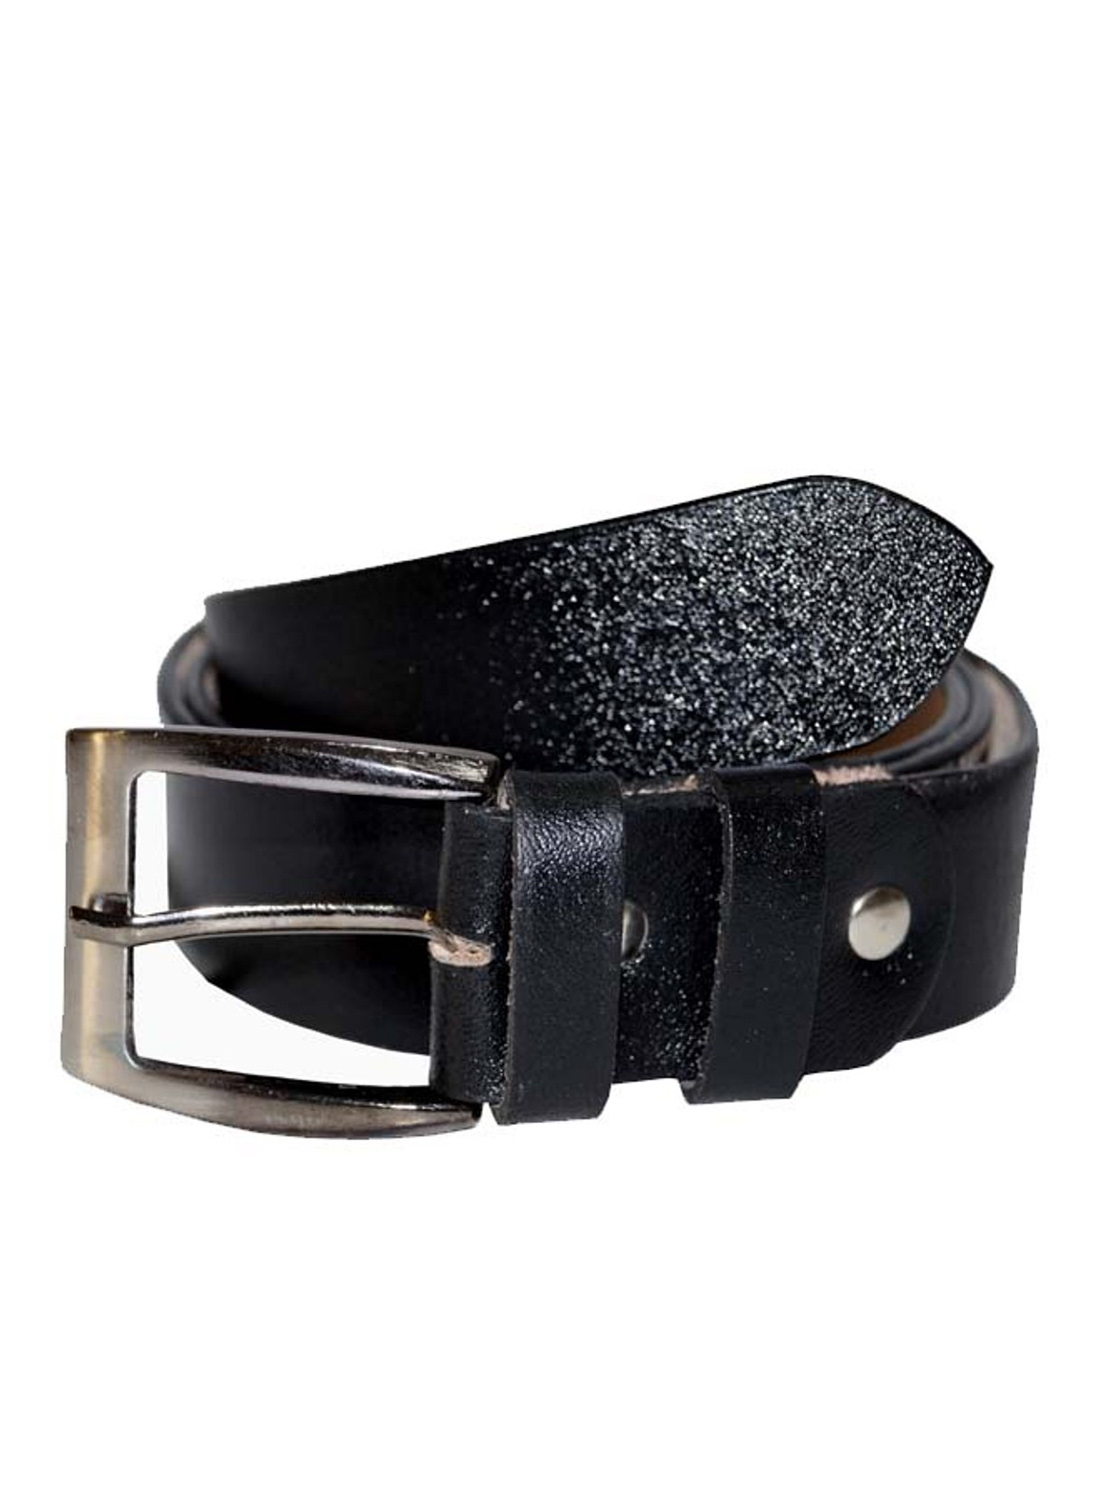 Fashion :: Accessories :: Belts :: Best Seller Formal Leather Mens Belt (Black) - mediakits.theygsgroup.com